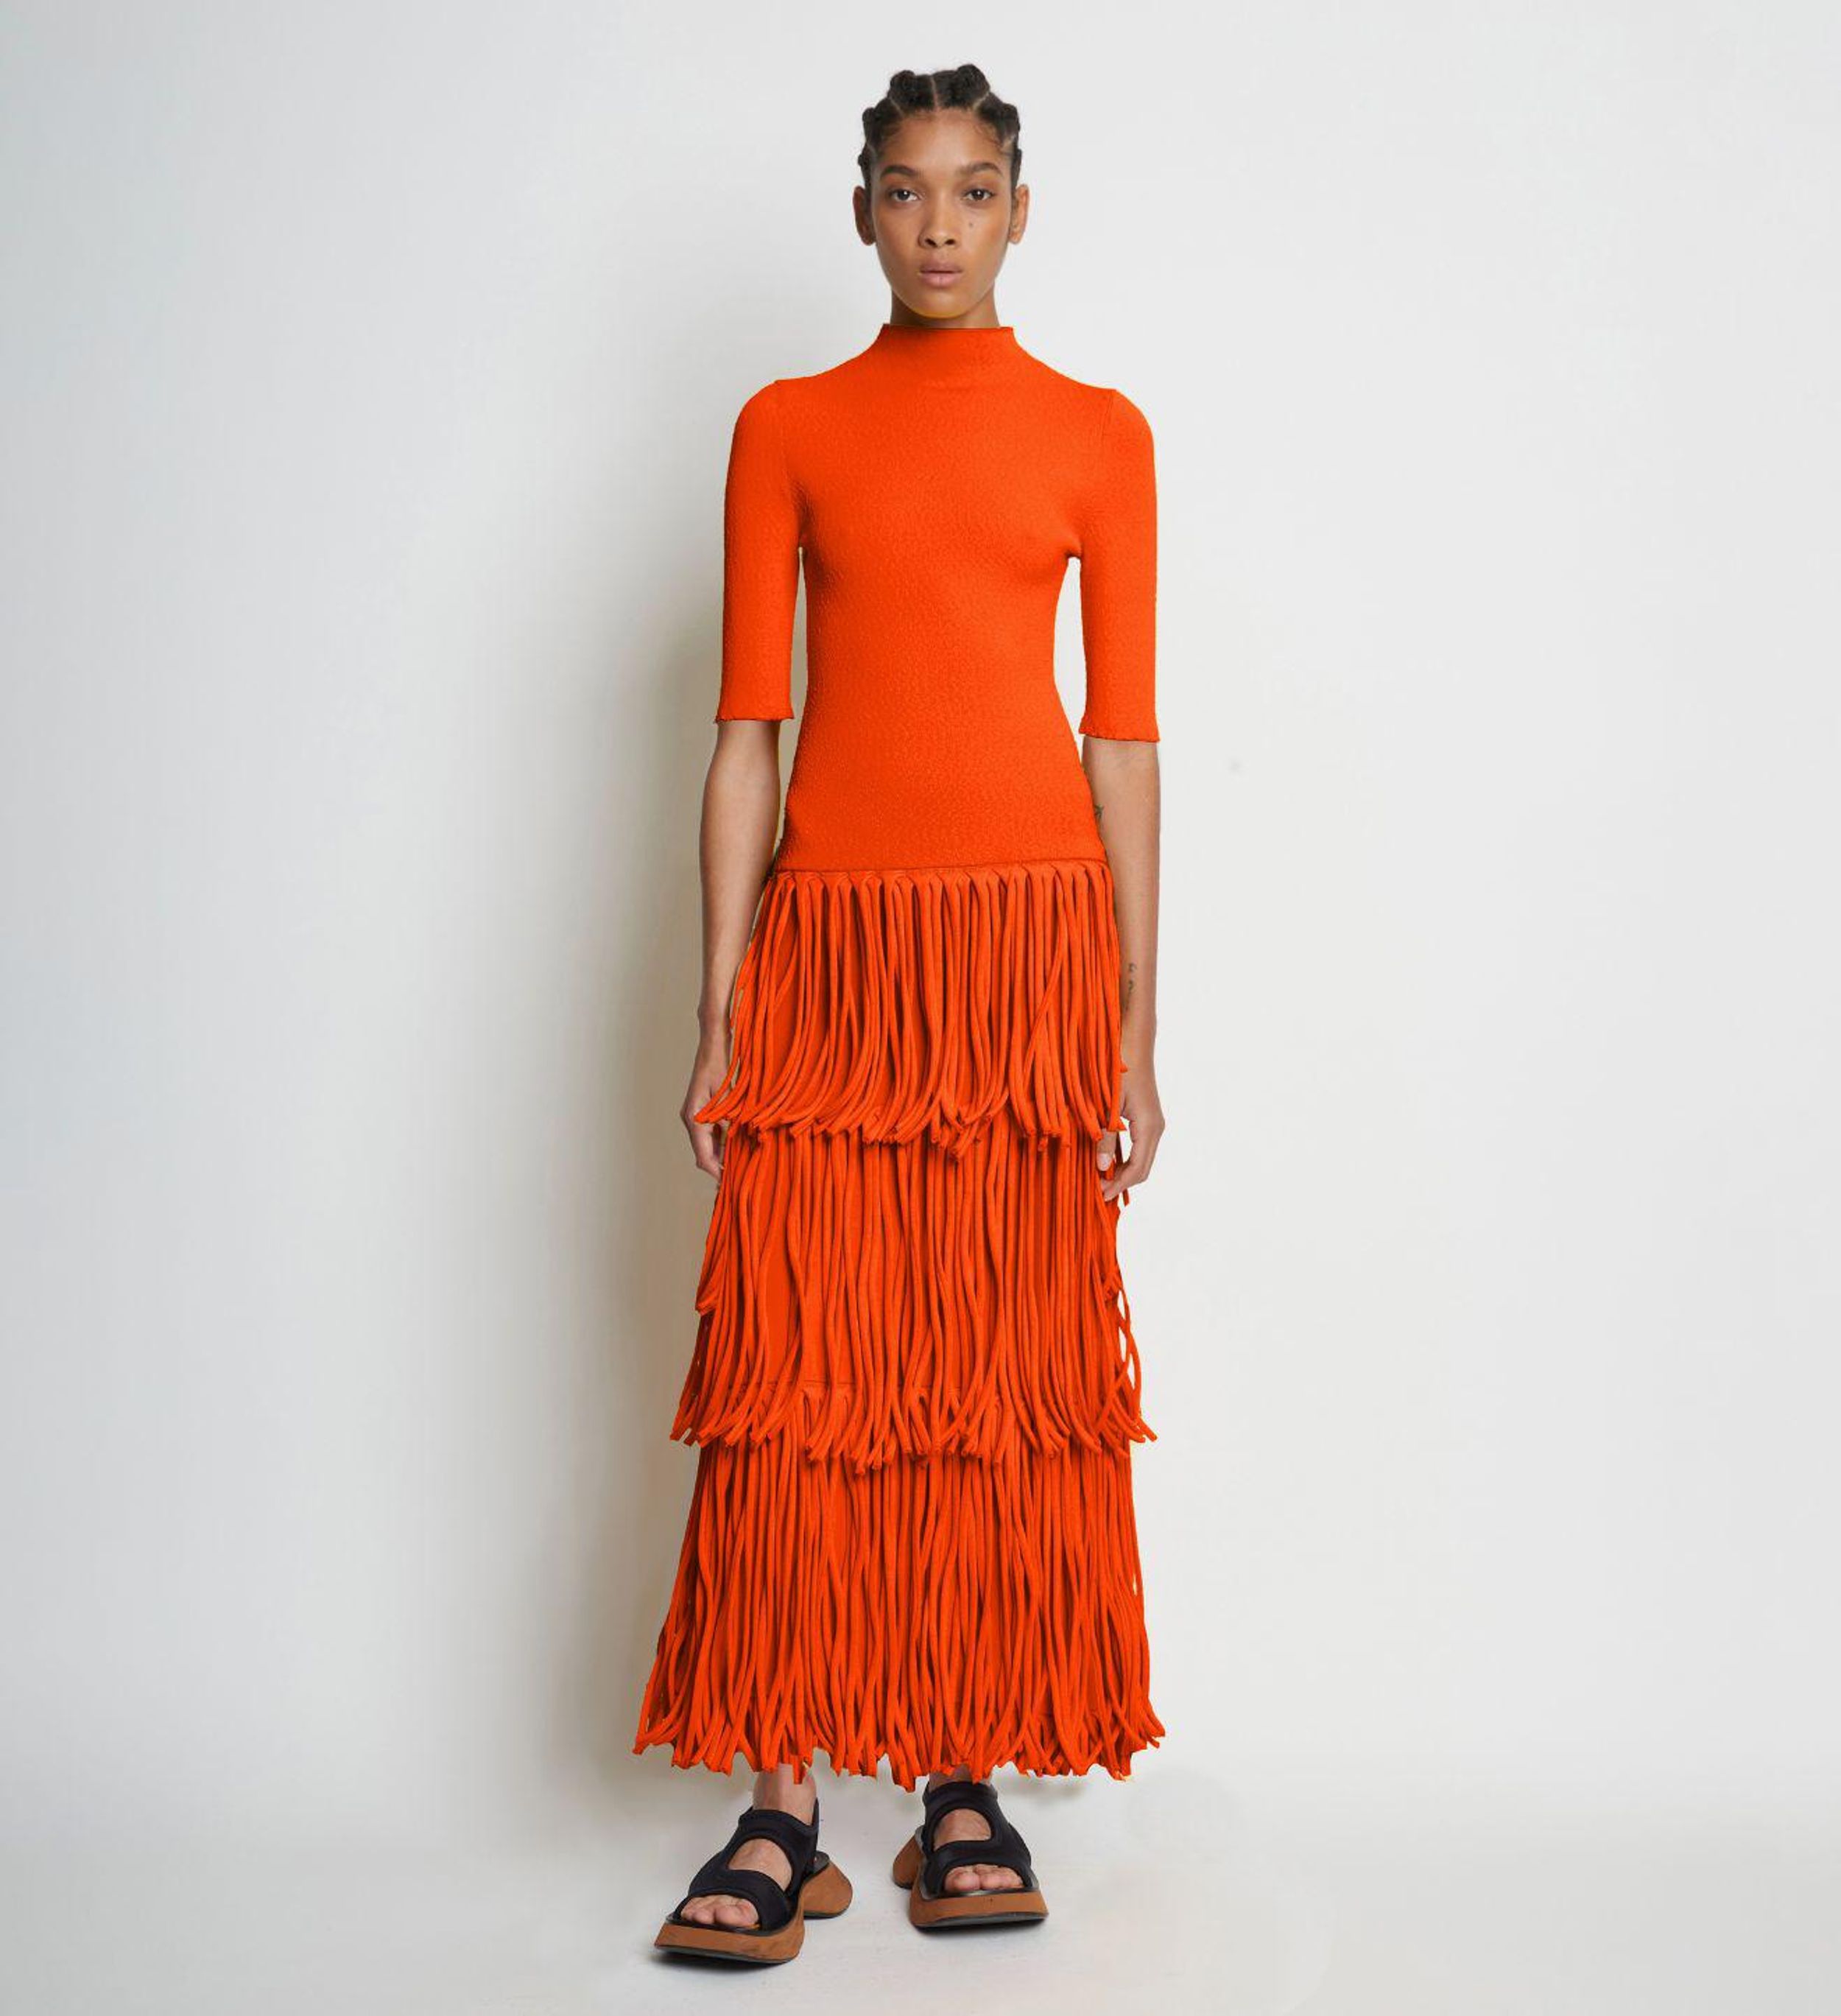 Textured Knit Fringe Dress - Coveteur: Inside Closets, Fashion, Beauty ...